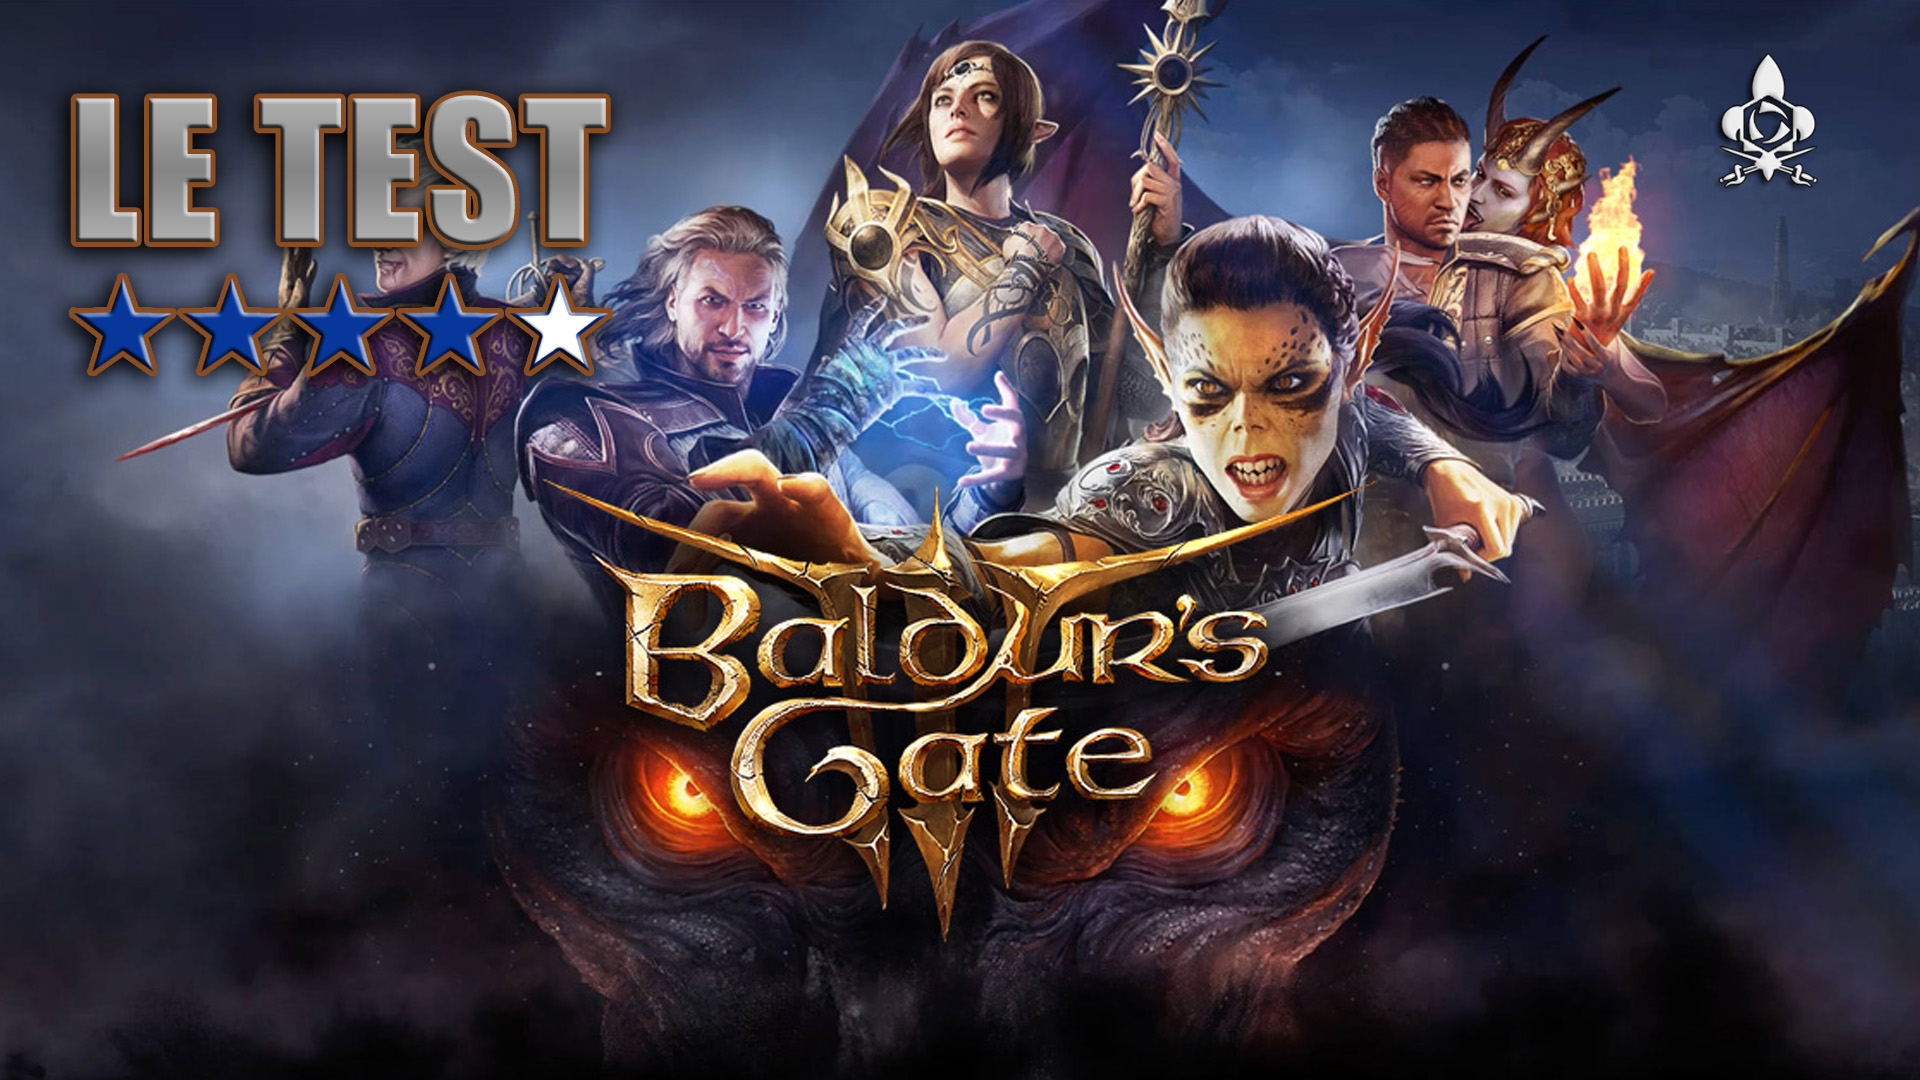 Baldur's Gate 3 test, the great adventure!